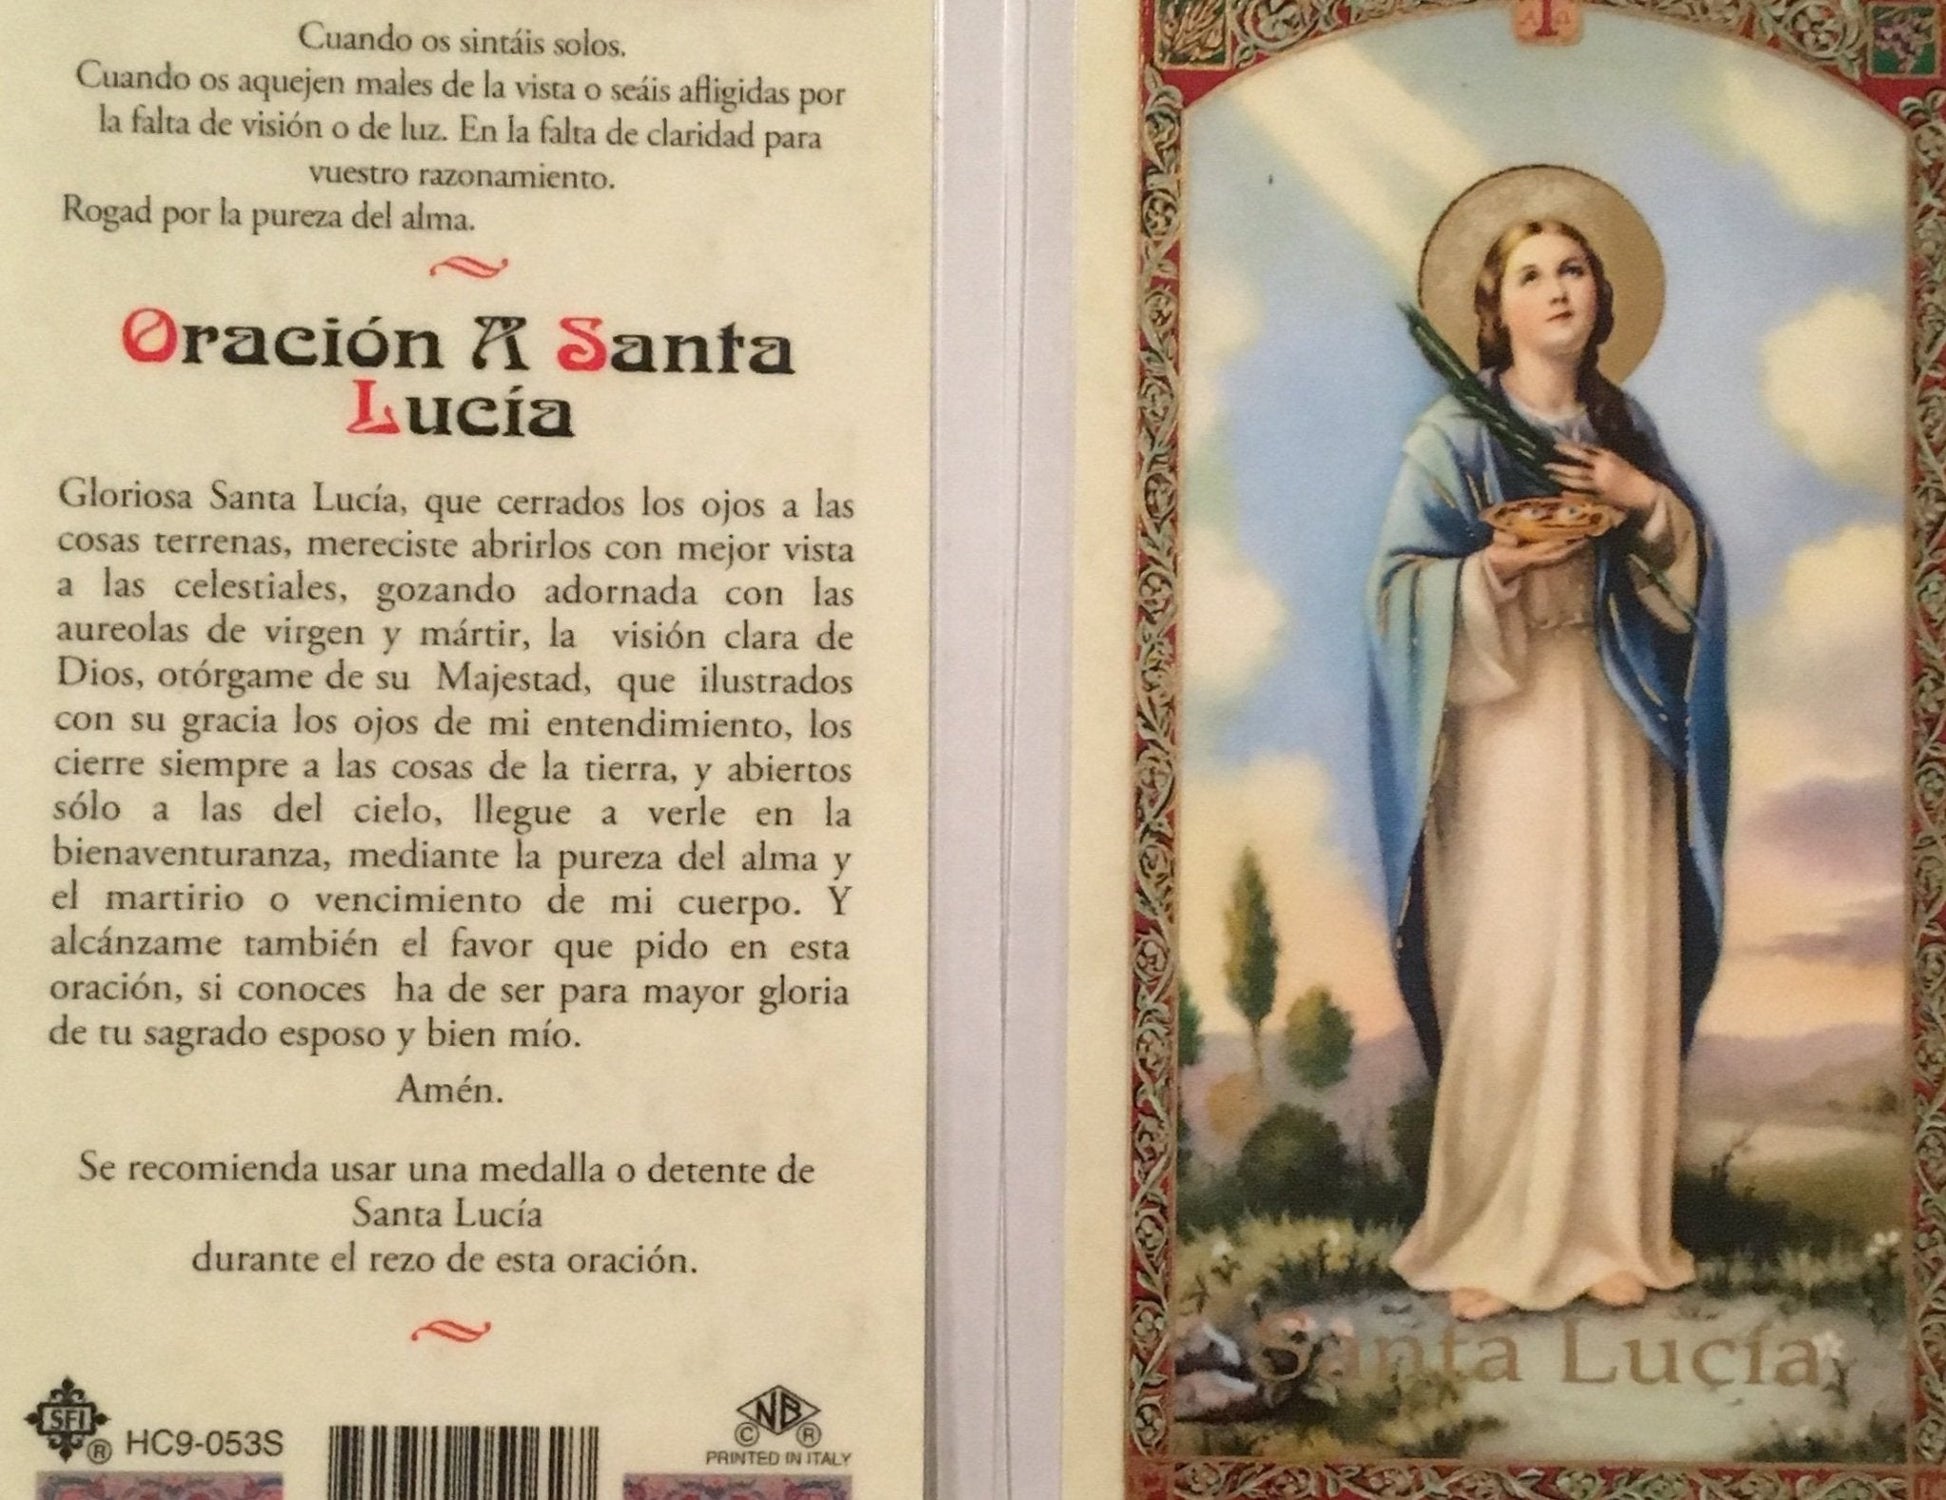 Prayer Card Oracion A Santa Lucia SPANISH Laminated HC9-053S - Ysleta Mission Gift Shop- VOTED El Paso's Best Gift Shop